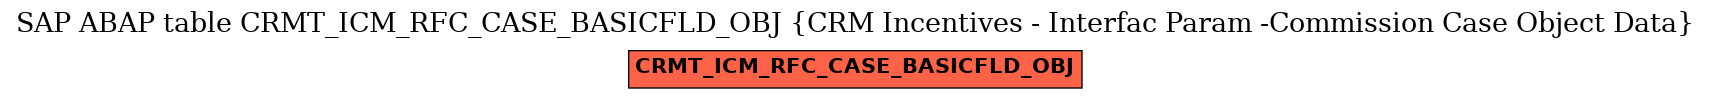 E-R Diagram for table CRMT_ICM_RFC_CASE_BASICFLD_OBJ (CRM Incentives - Interfac Param -Commission Case Object Data)